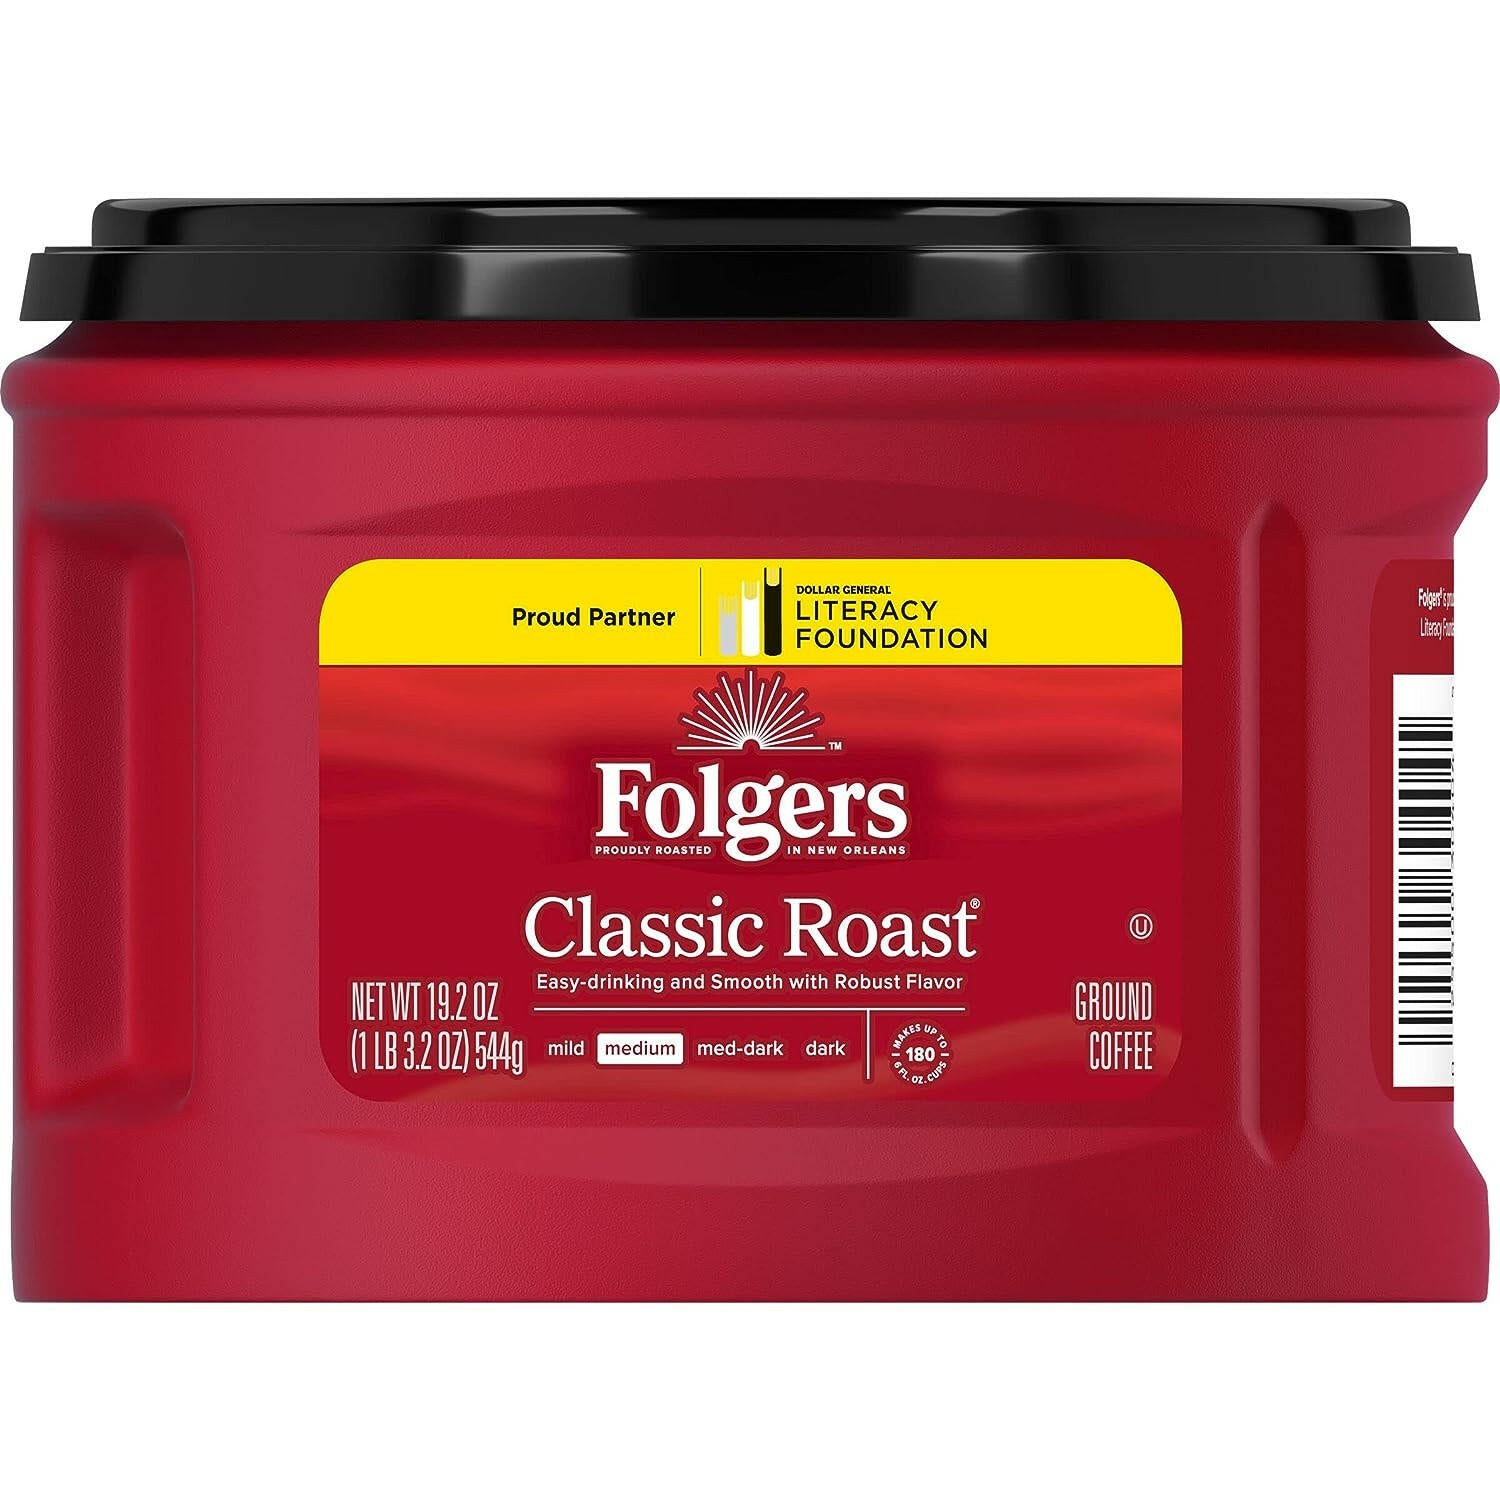 Folgers Classic Roast Instant Coffee, 19.20 oz